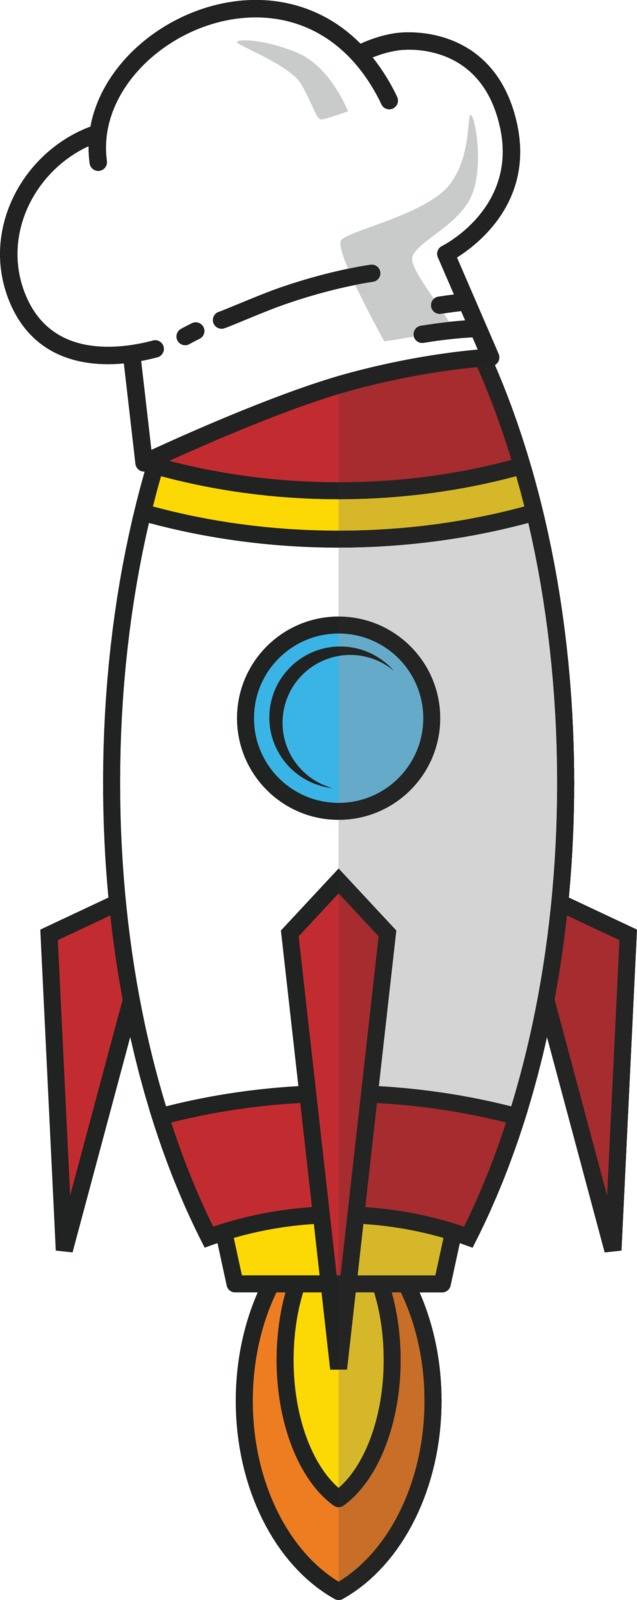 master chef rocket ship hat theme logo vector art